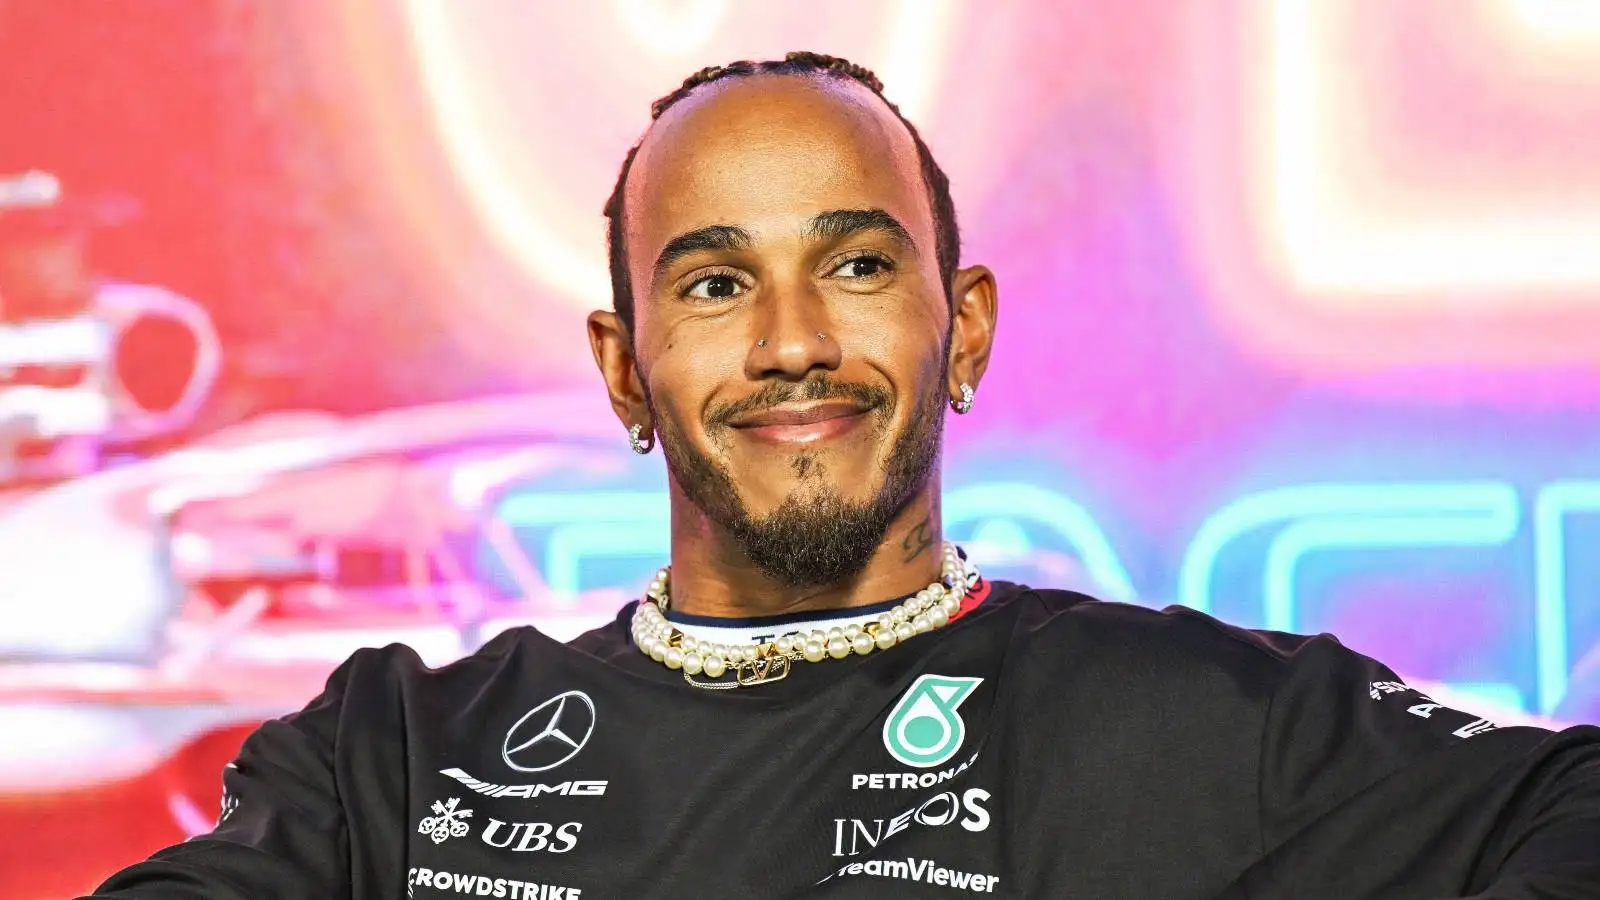 Mercedes driver Lewis Hamilton smiling as he talks to the media ahead of the Las Vegas Grand Prix.